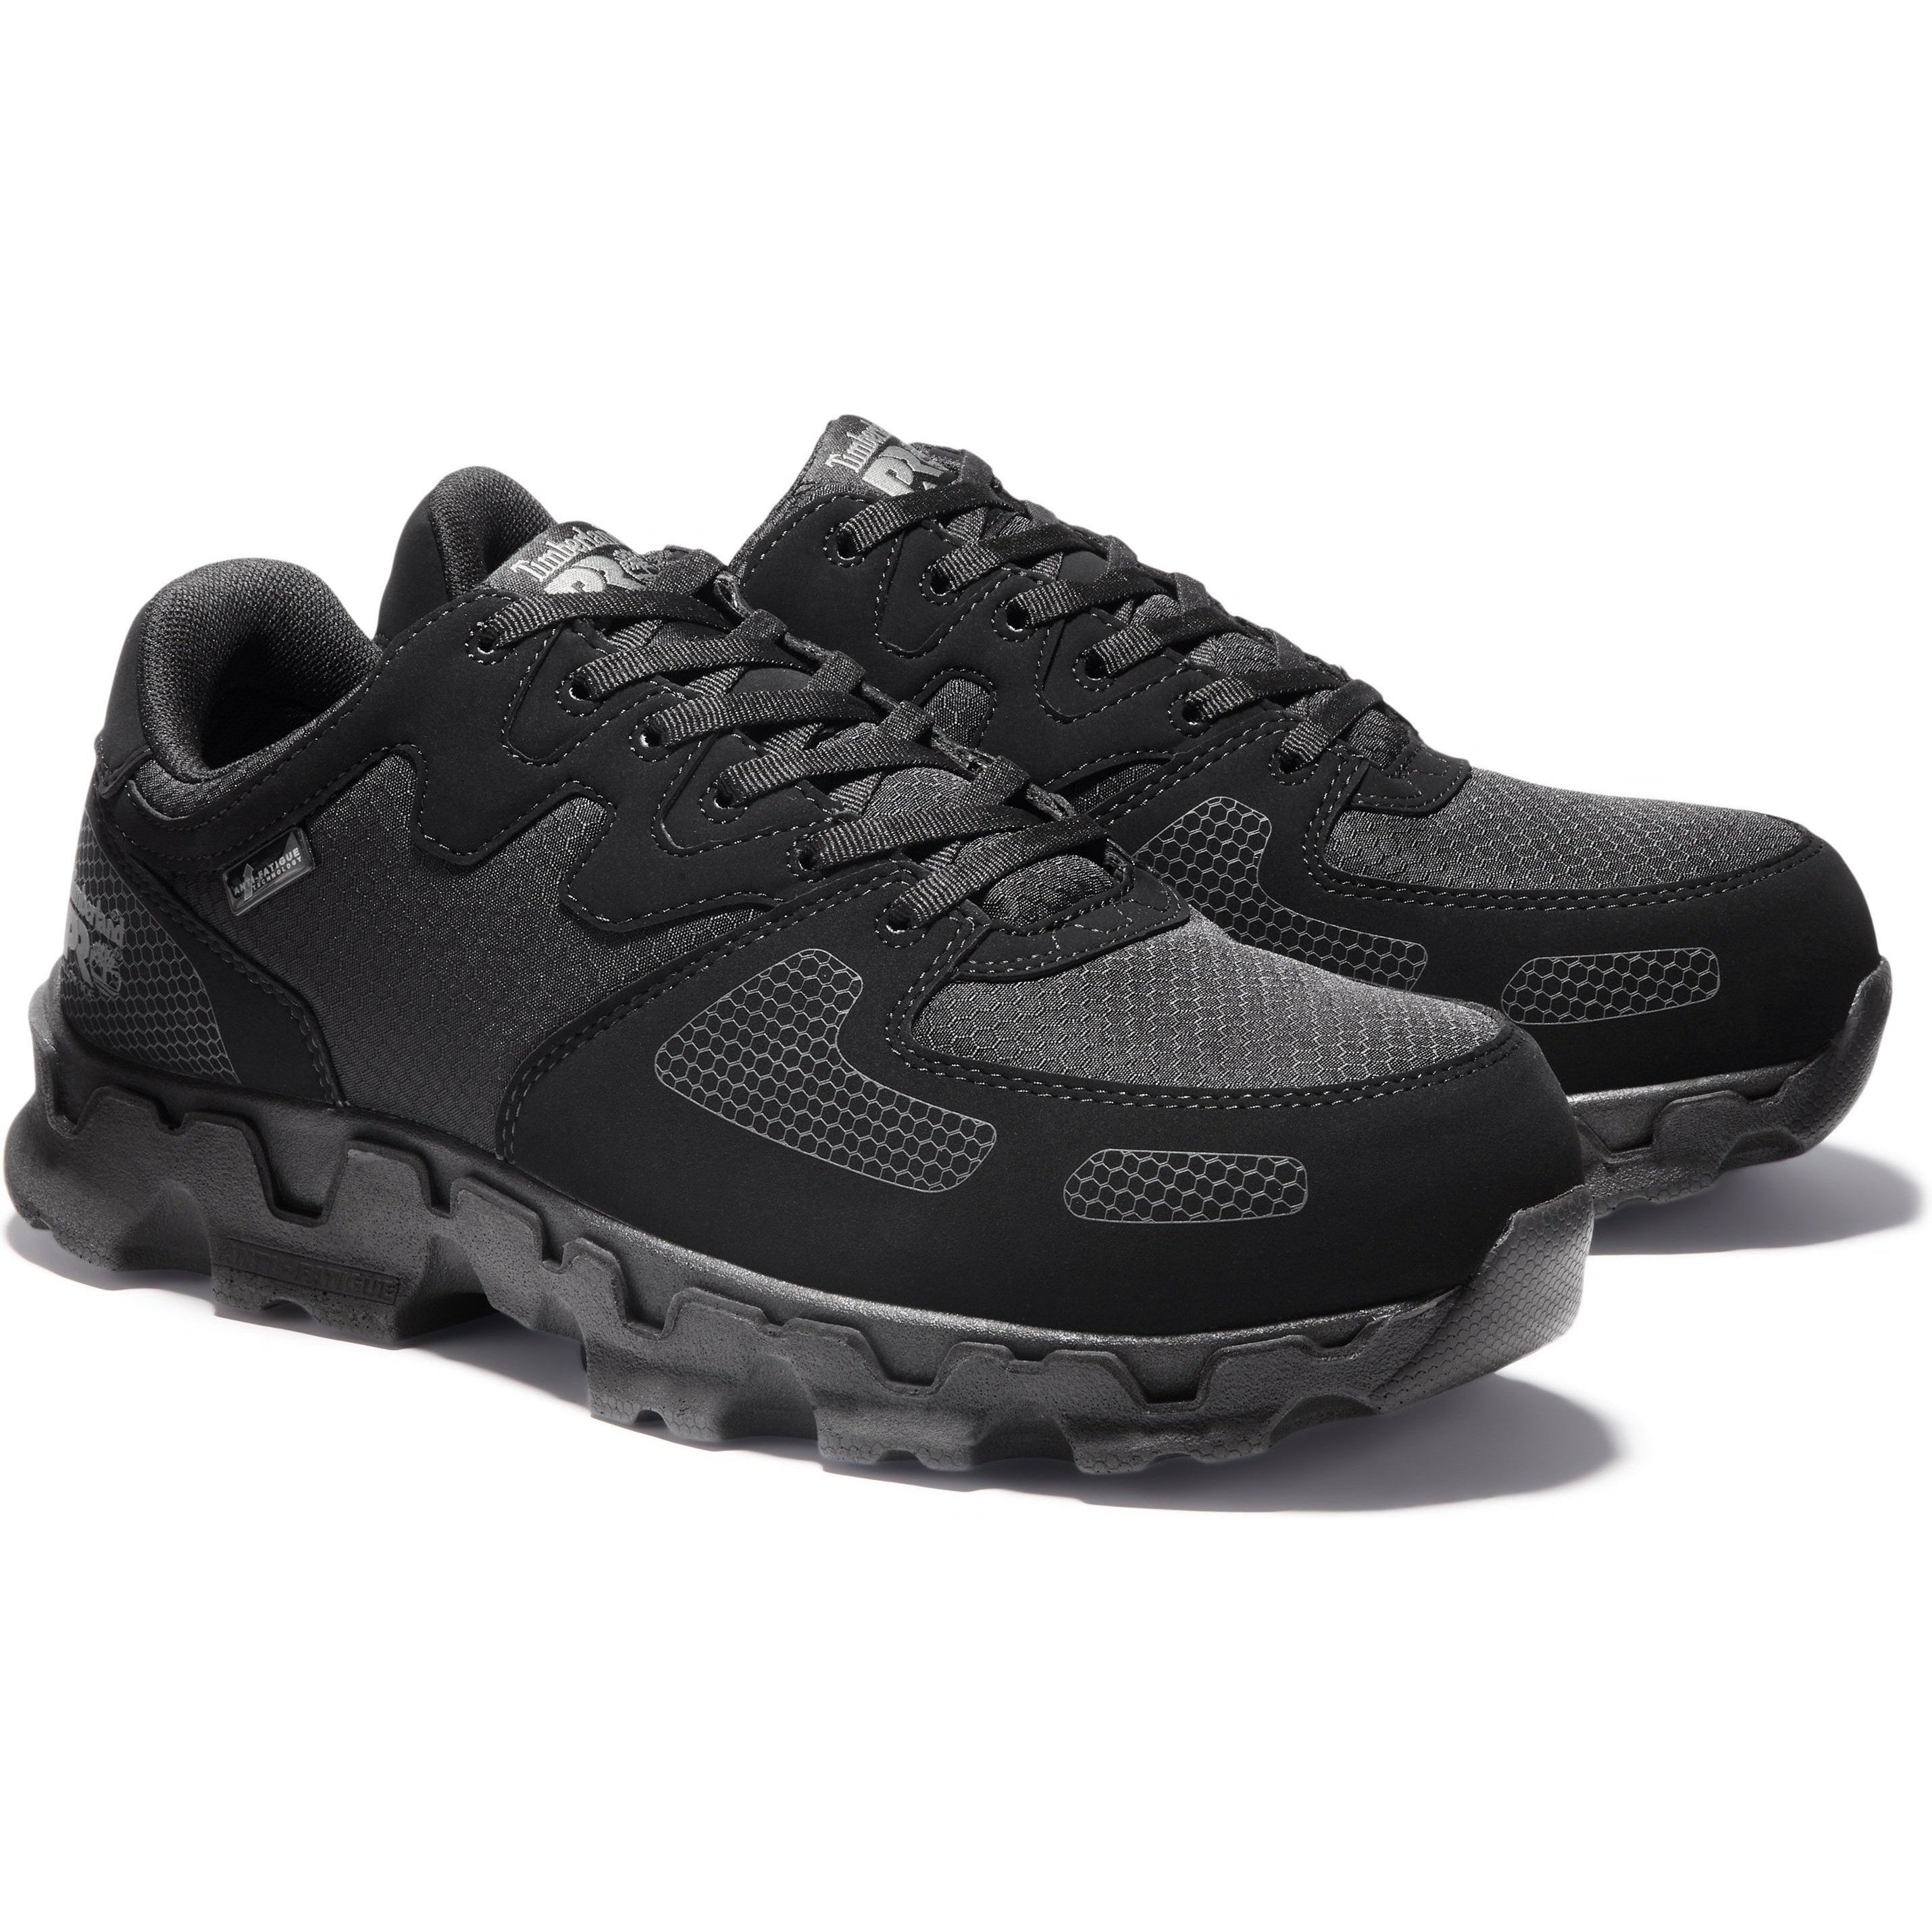 Timberland PRO Men's Powertrain Alloy Toe SD+ Work Shoe - TB0A16NN001 7 / Medium / Black Synthetic Nylon - Overlook Boots